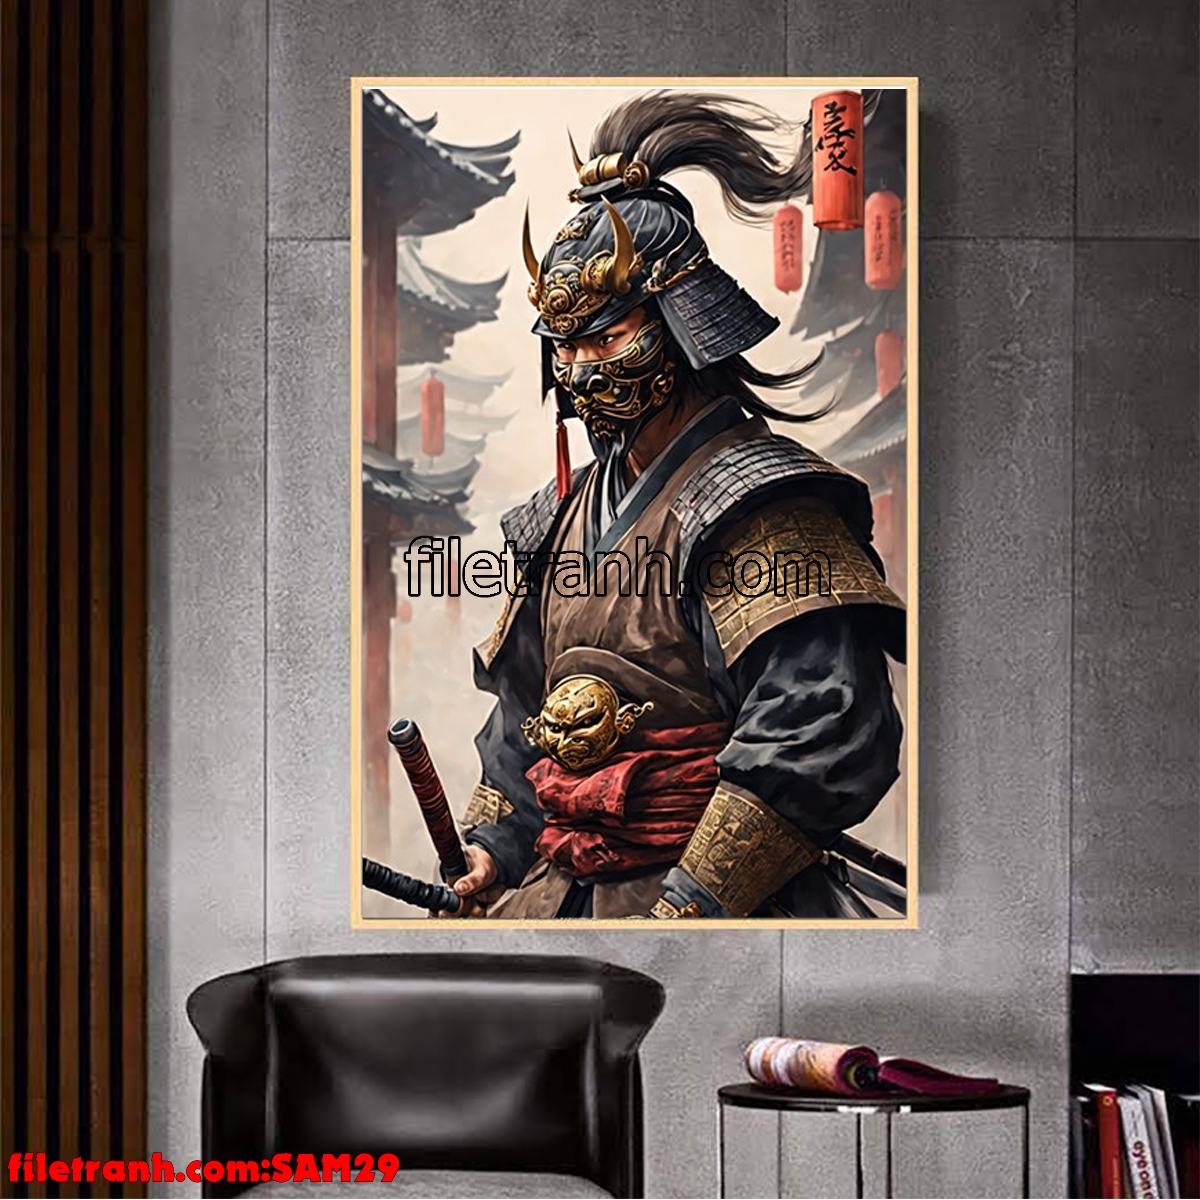 https://filetranh.com/samurai/file-tranh-samurai-vo-si-nhat-ban-sam29.html